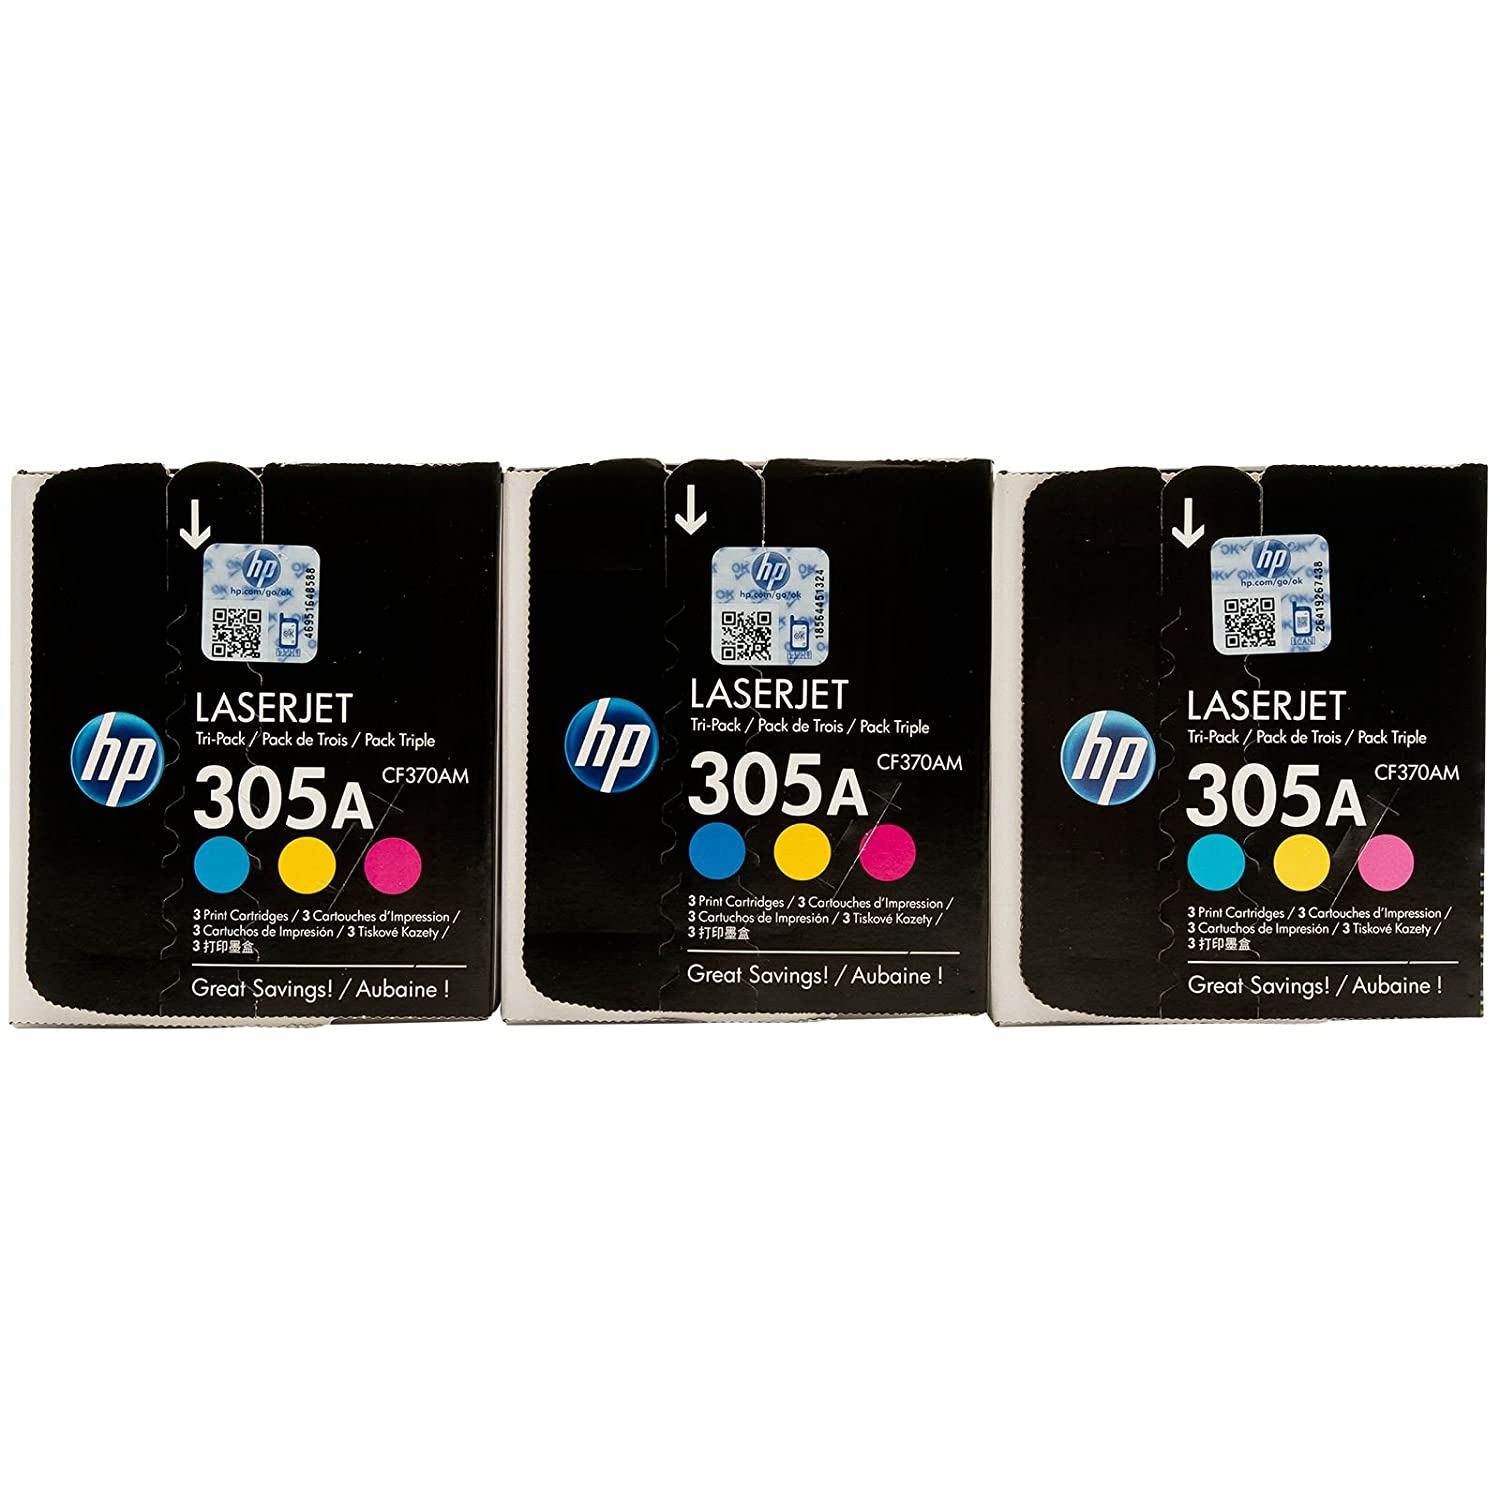 HP LASERJET Tri Pack Cyan Yellow Magenta (305A CF370AM NEW)